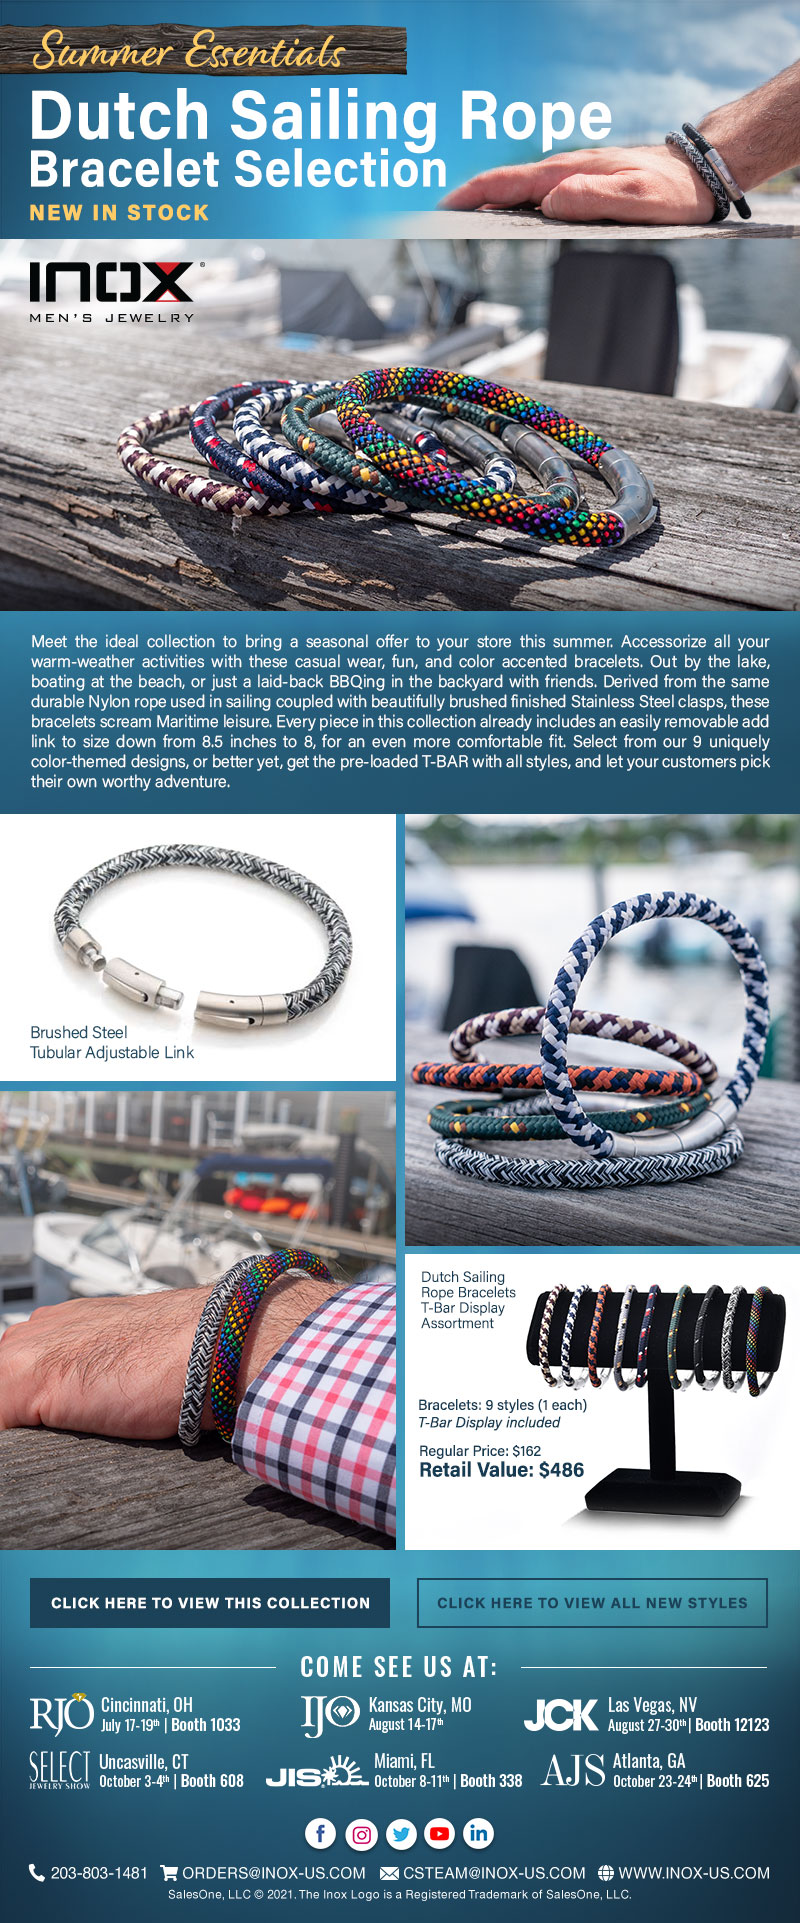 New Dutch Sailing Rope Bracelets for Summer